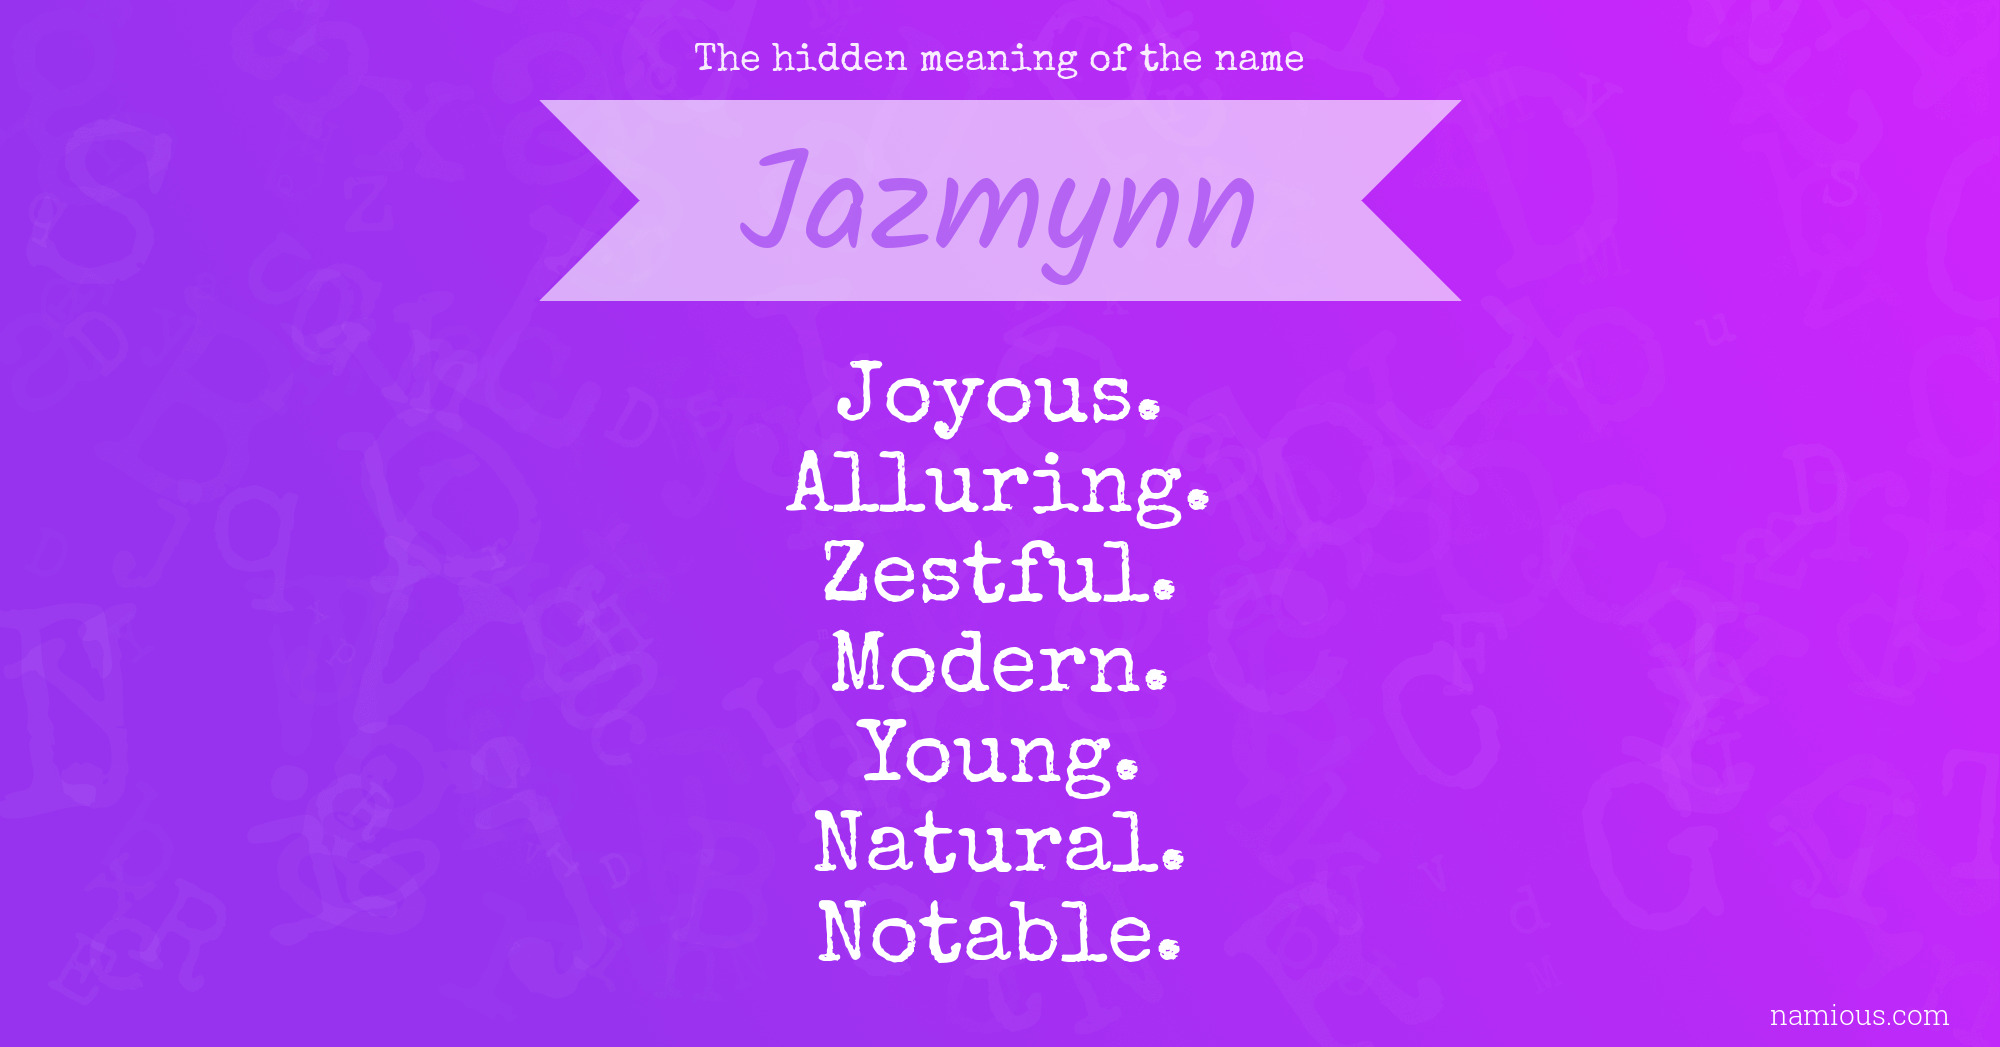 The hidden meaning of the name Jazmynn